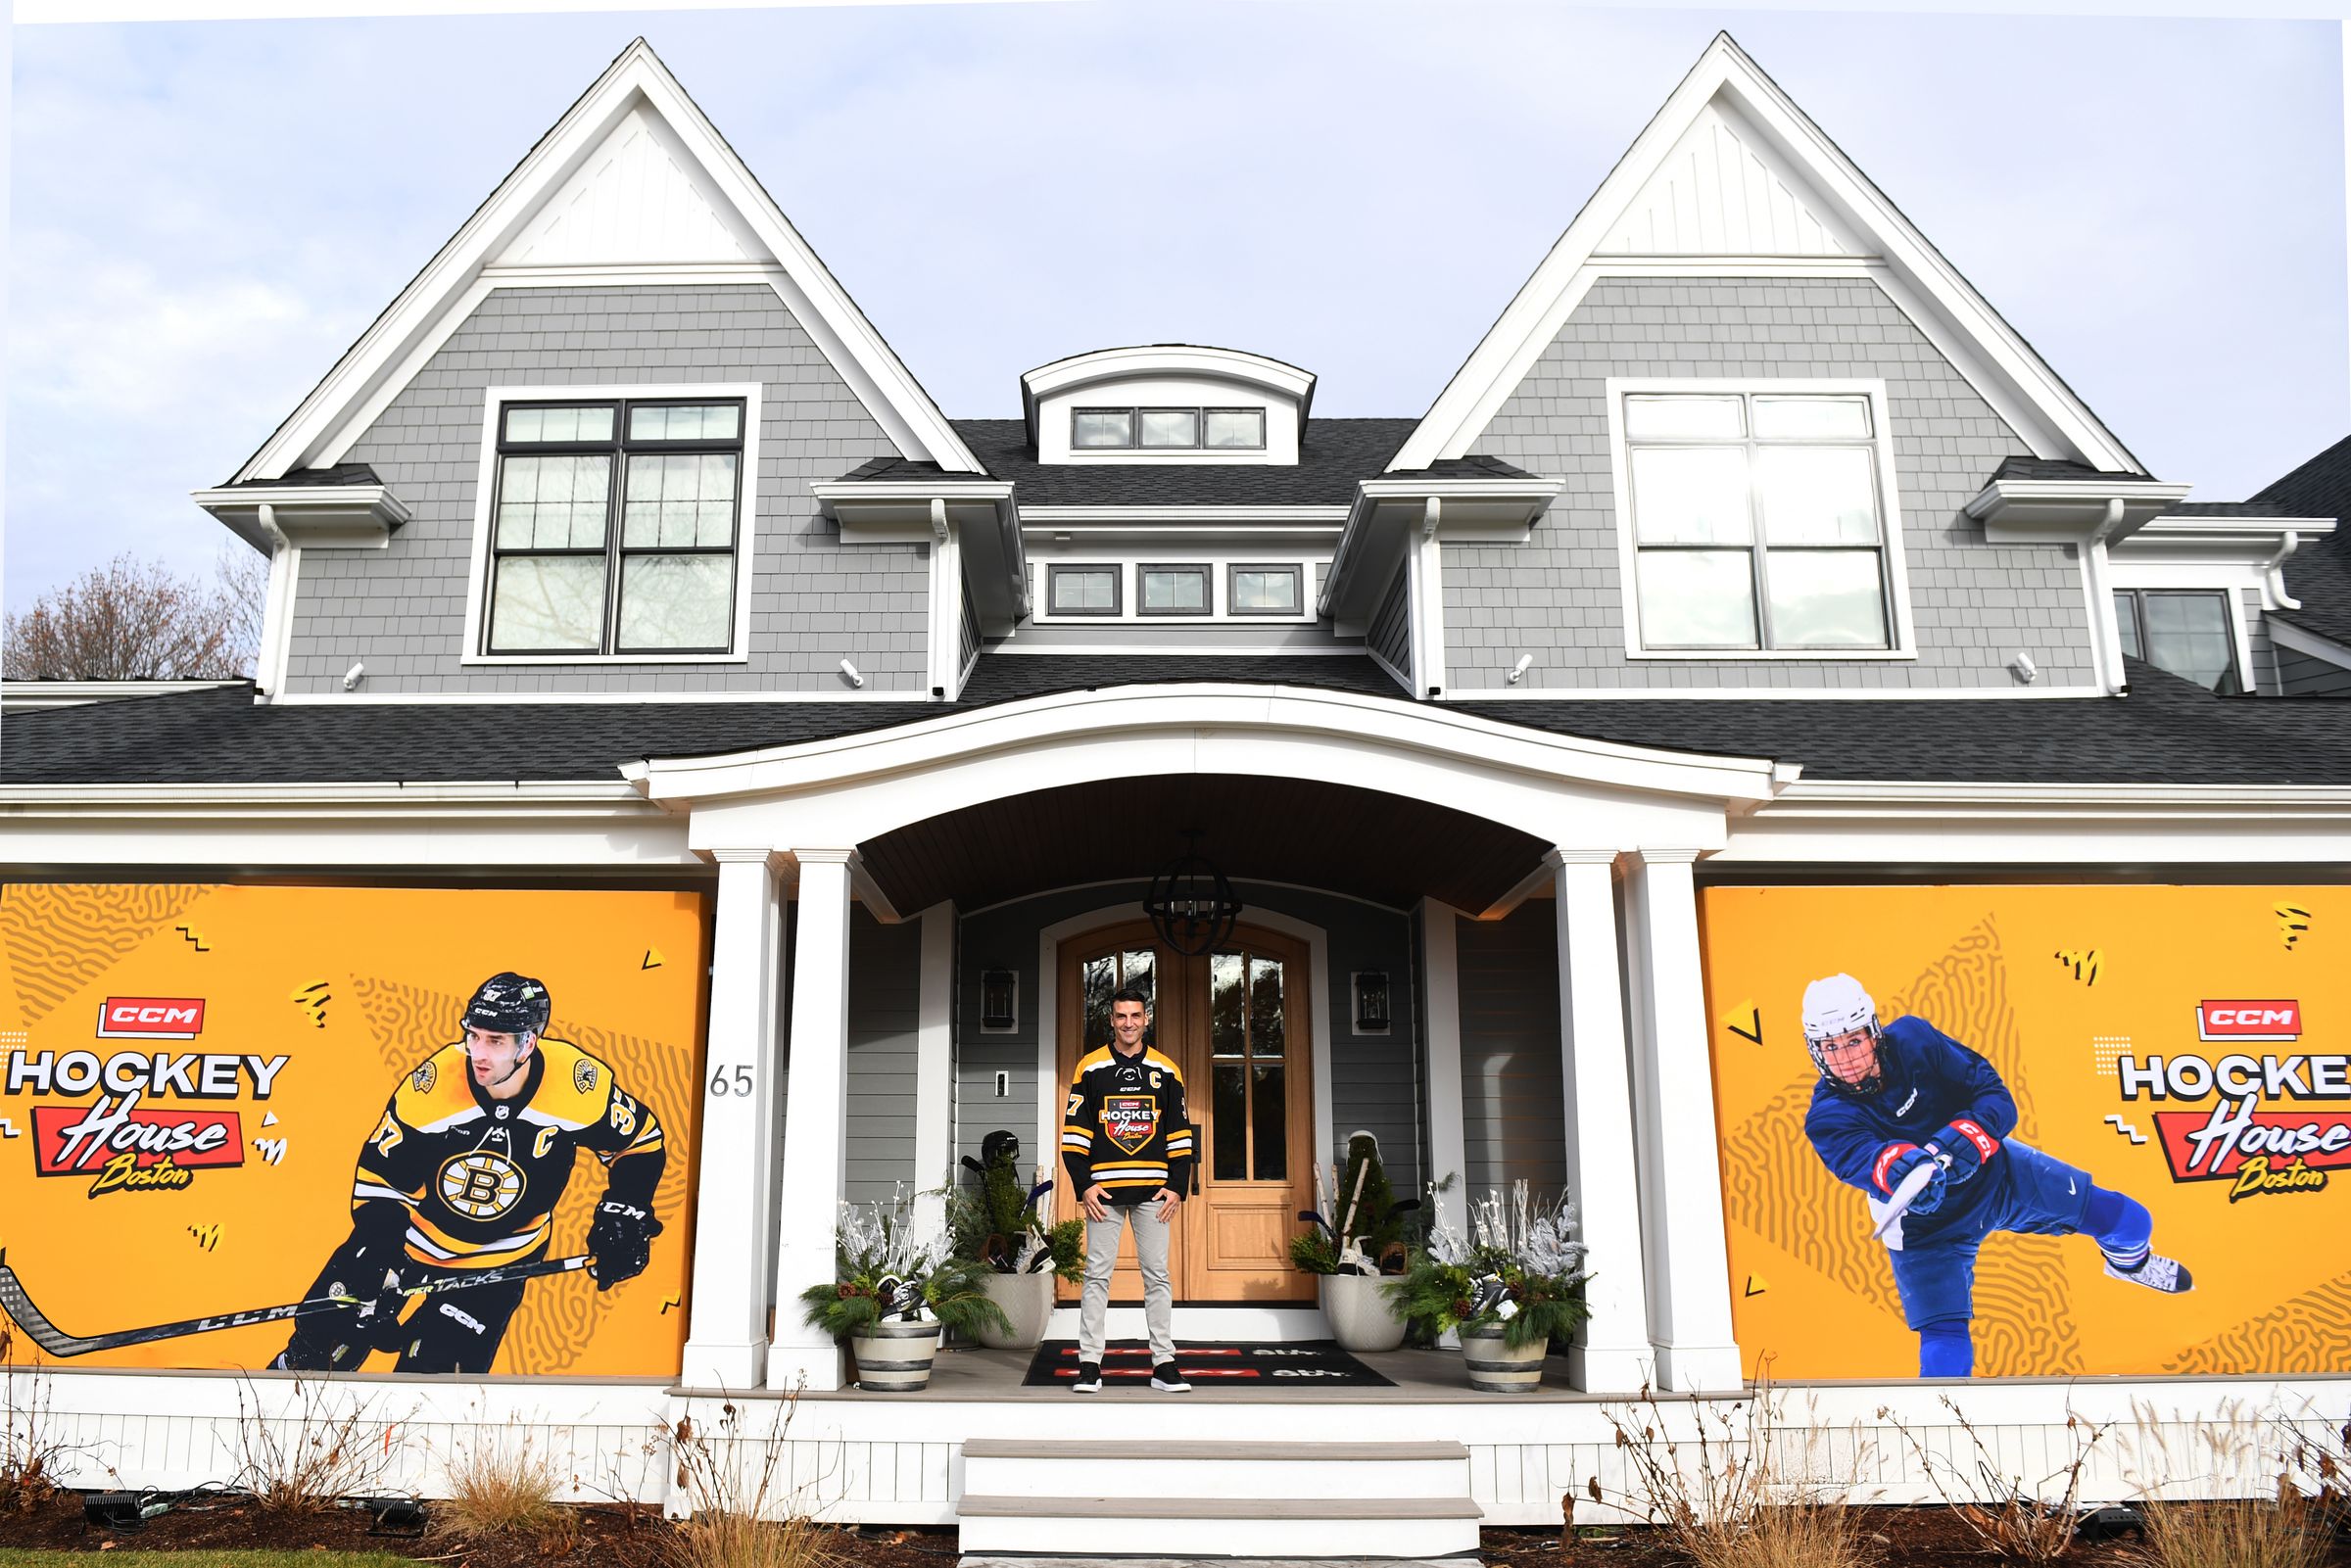 ccm-hockey-house-a-community-driven-experience-that-built-brand-fanatics